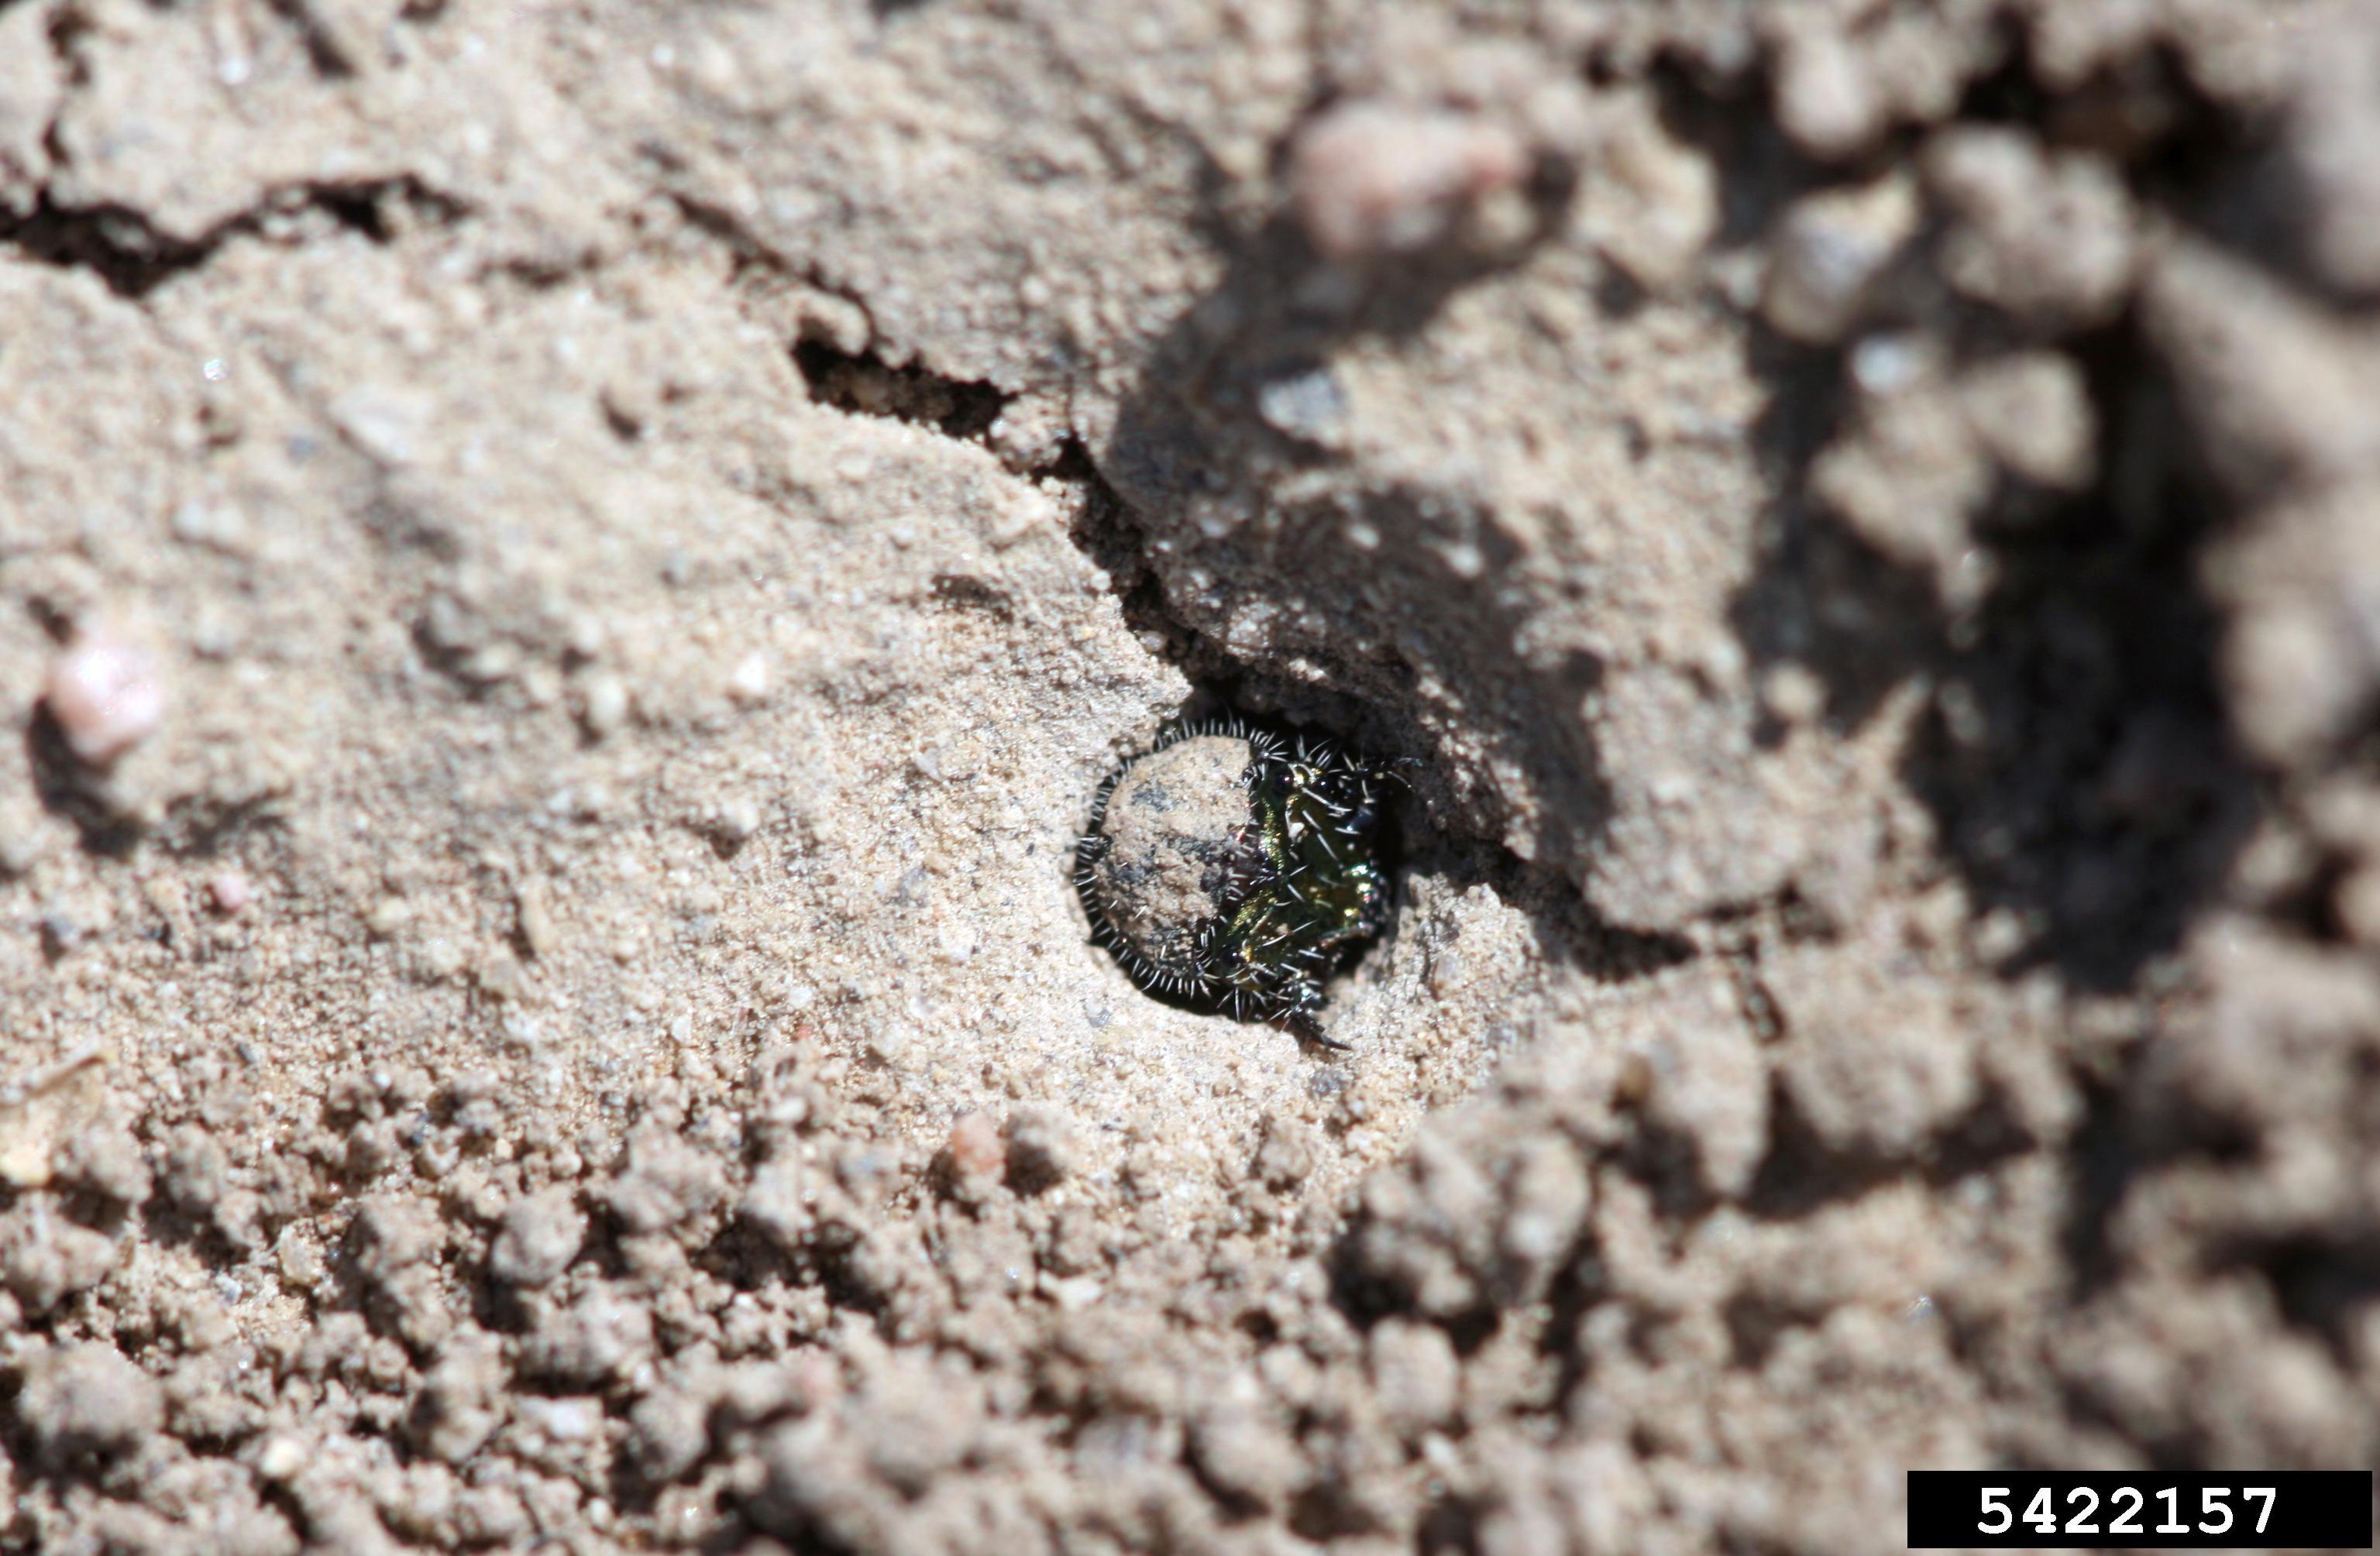 Tiger beetle larva in its burrow.